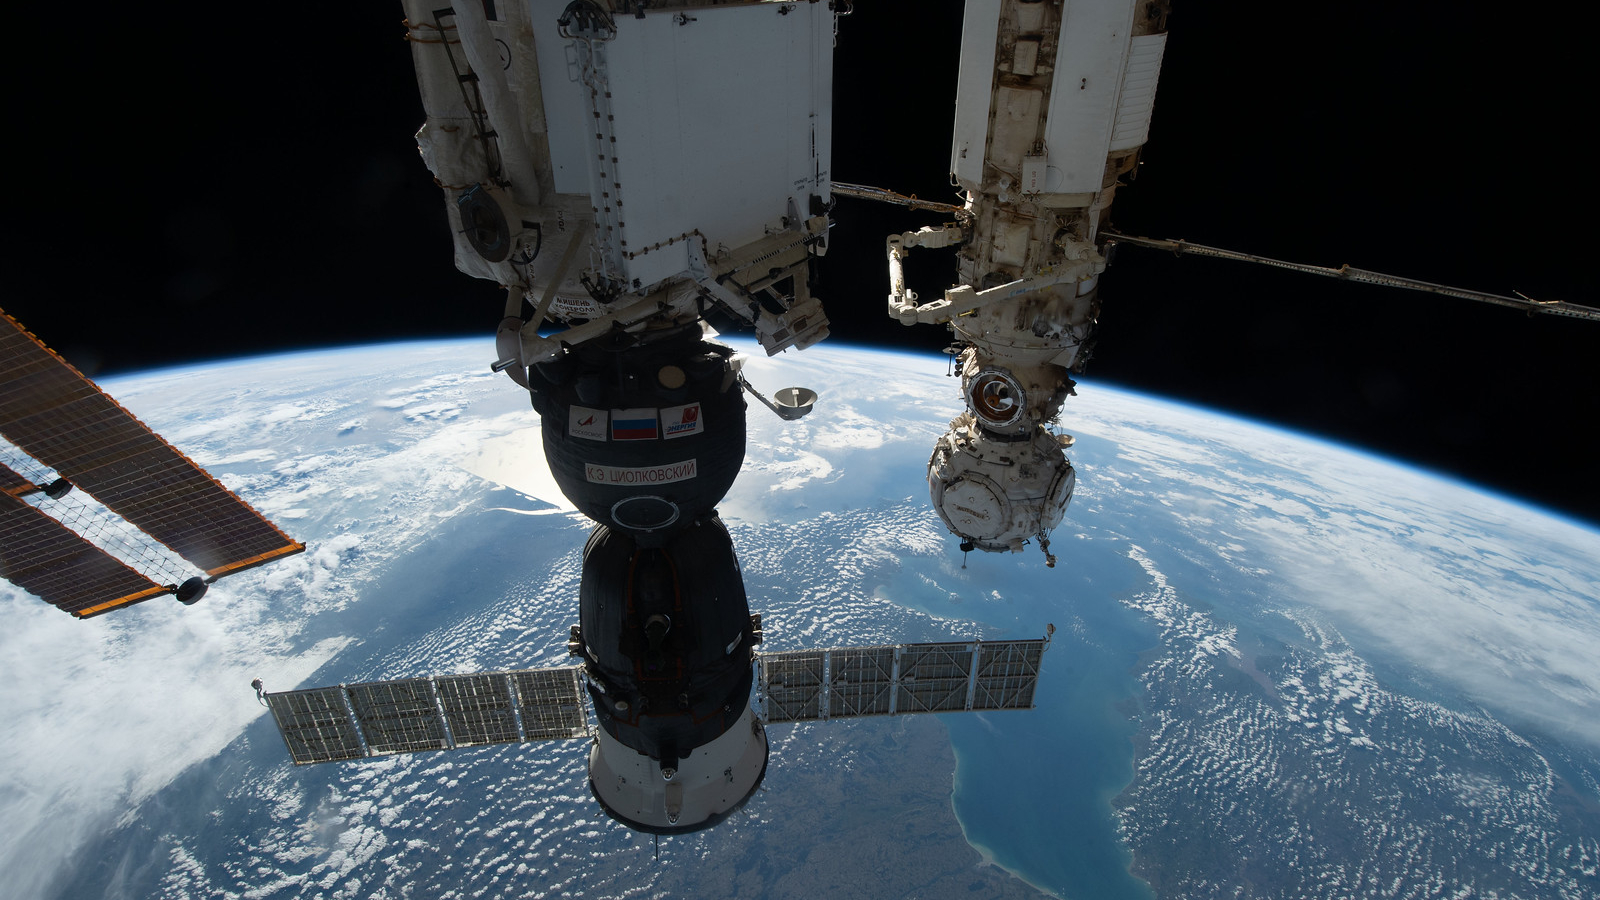 Soyuz - Ρωσία: Μελετάται αποστολή διάσωσης για το πλήρωμα του διαστημικού σταθμού